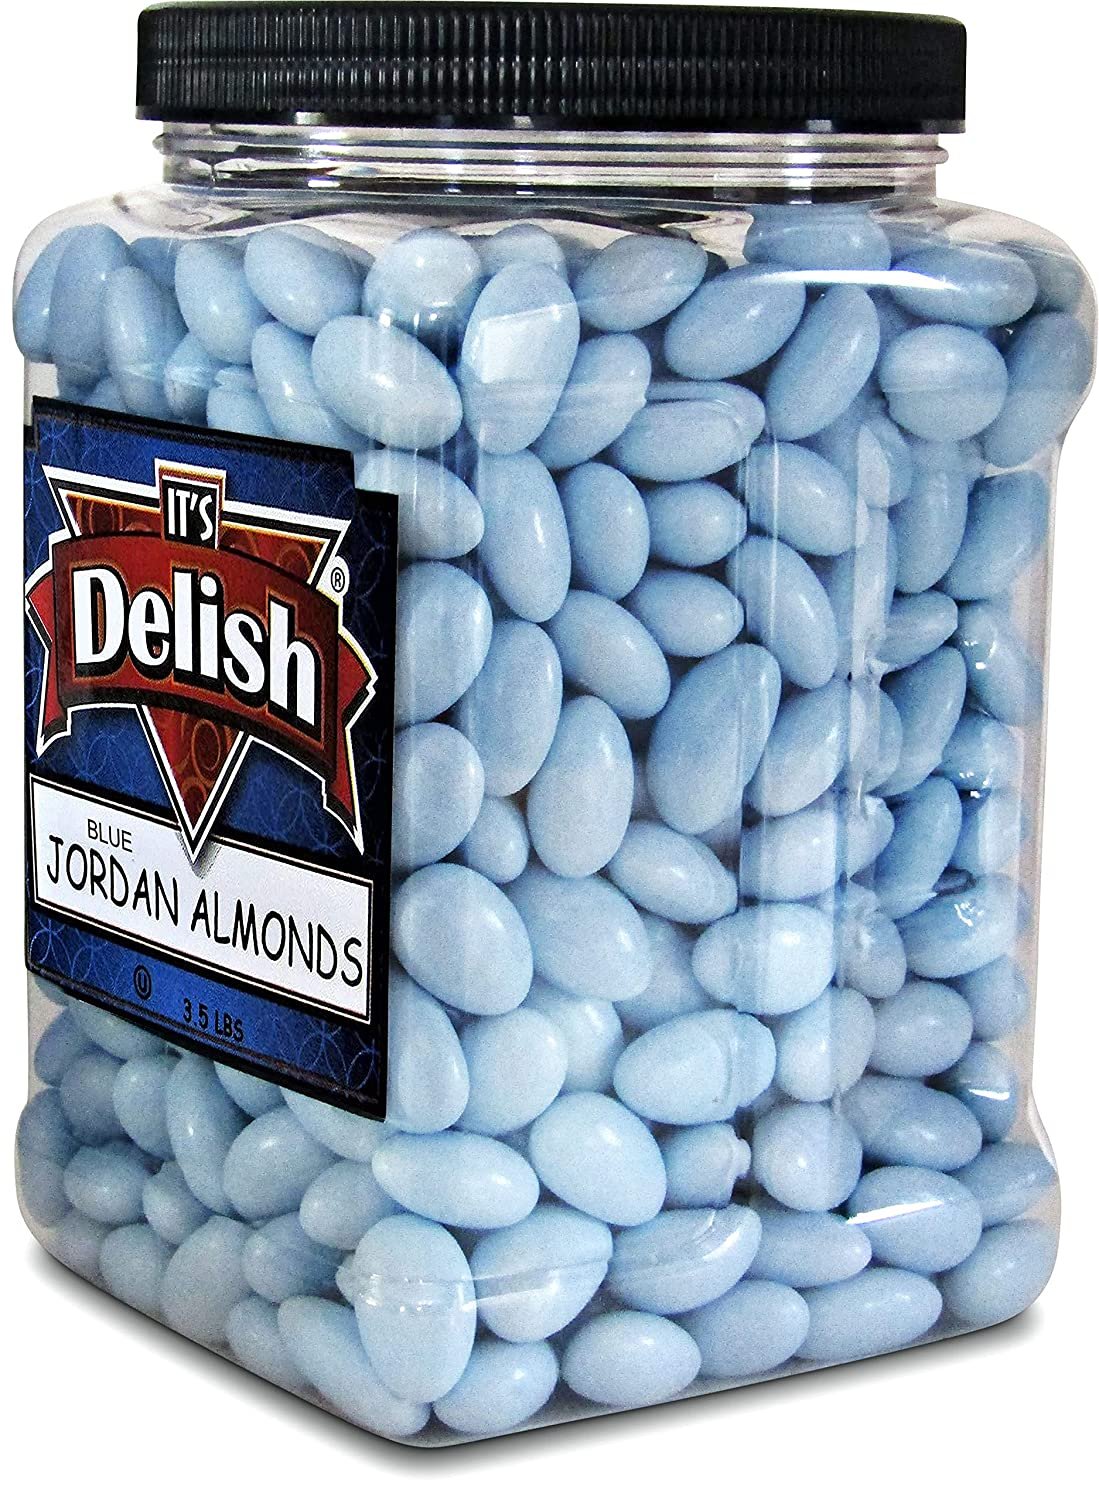 Light Blue Jordan Almonds, 3.5 lbs Jumbo Container